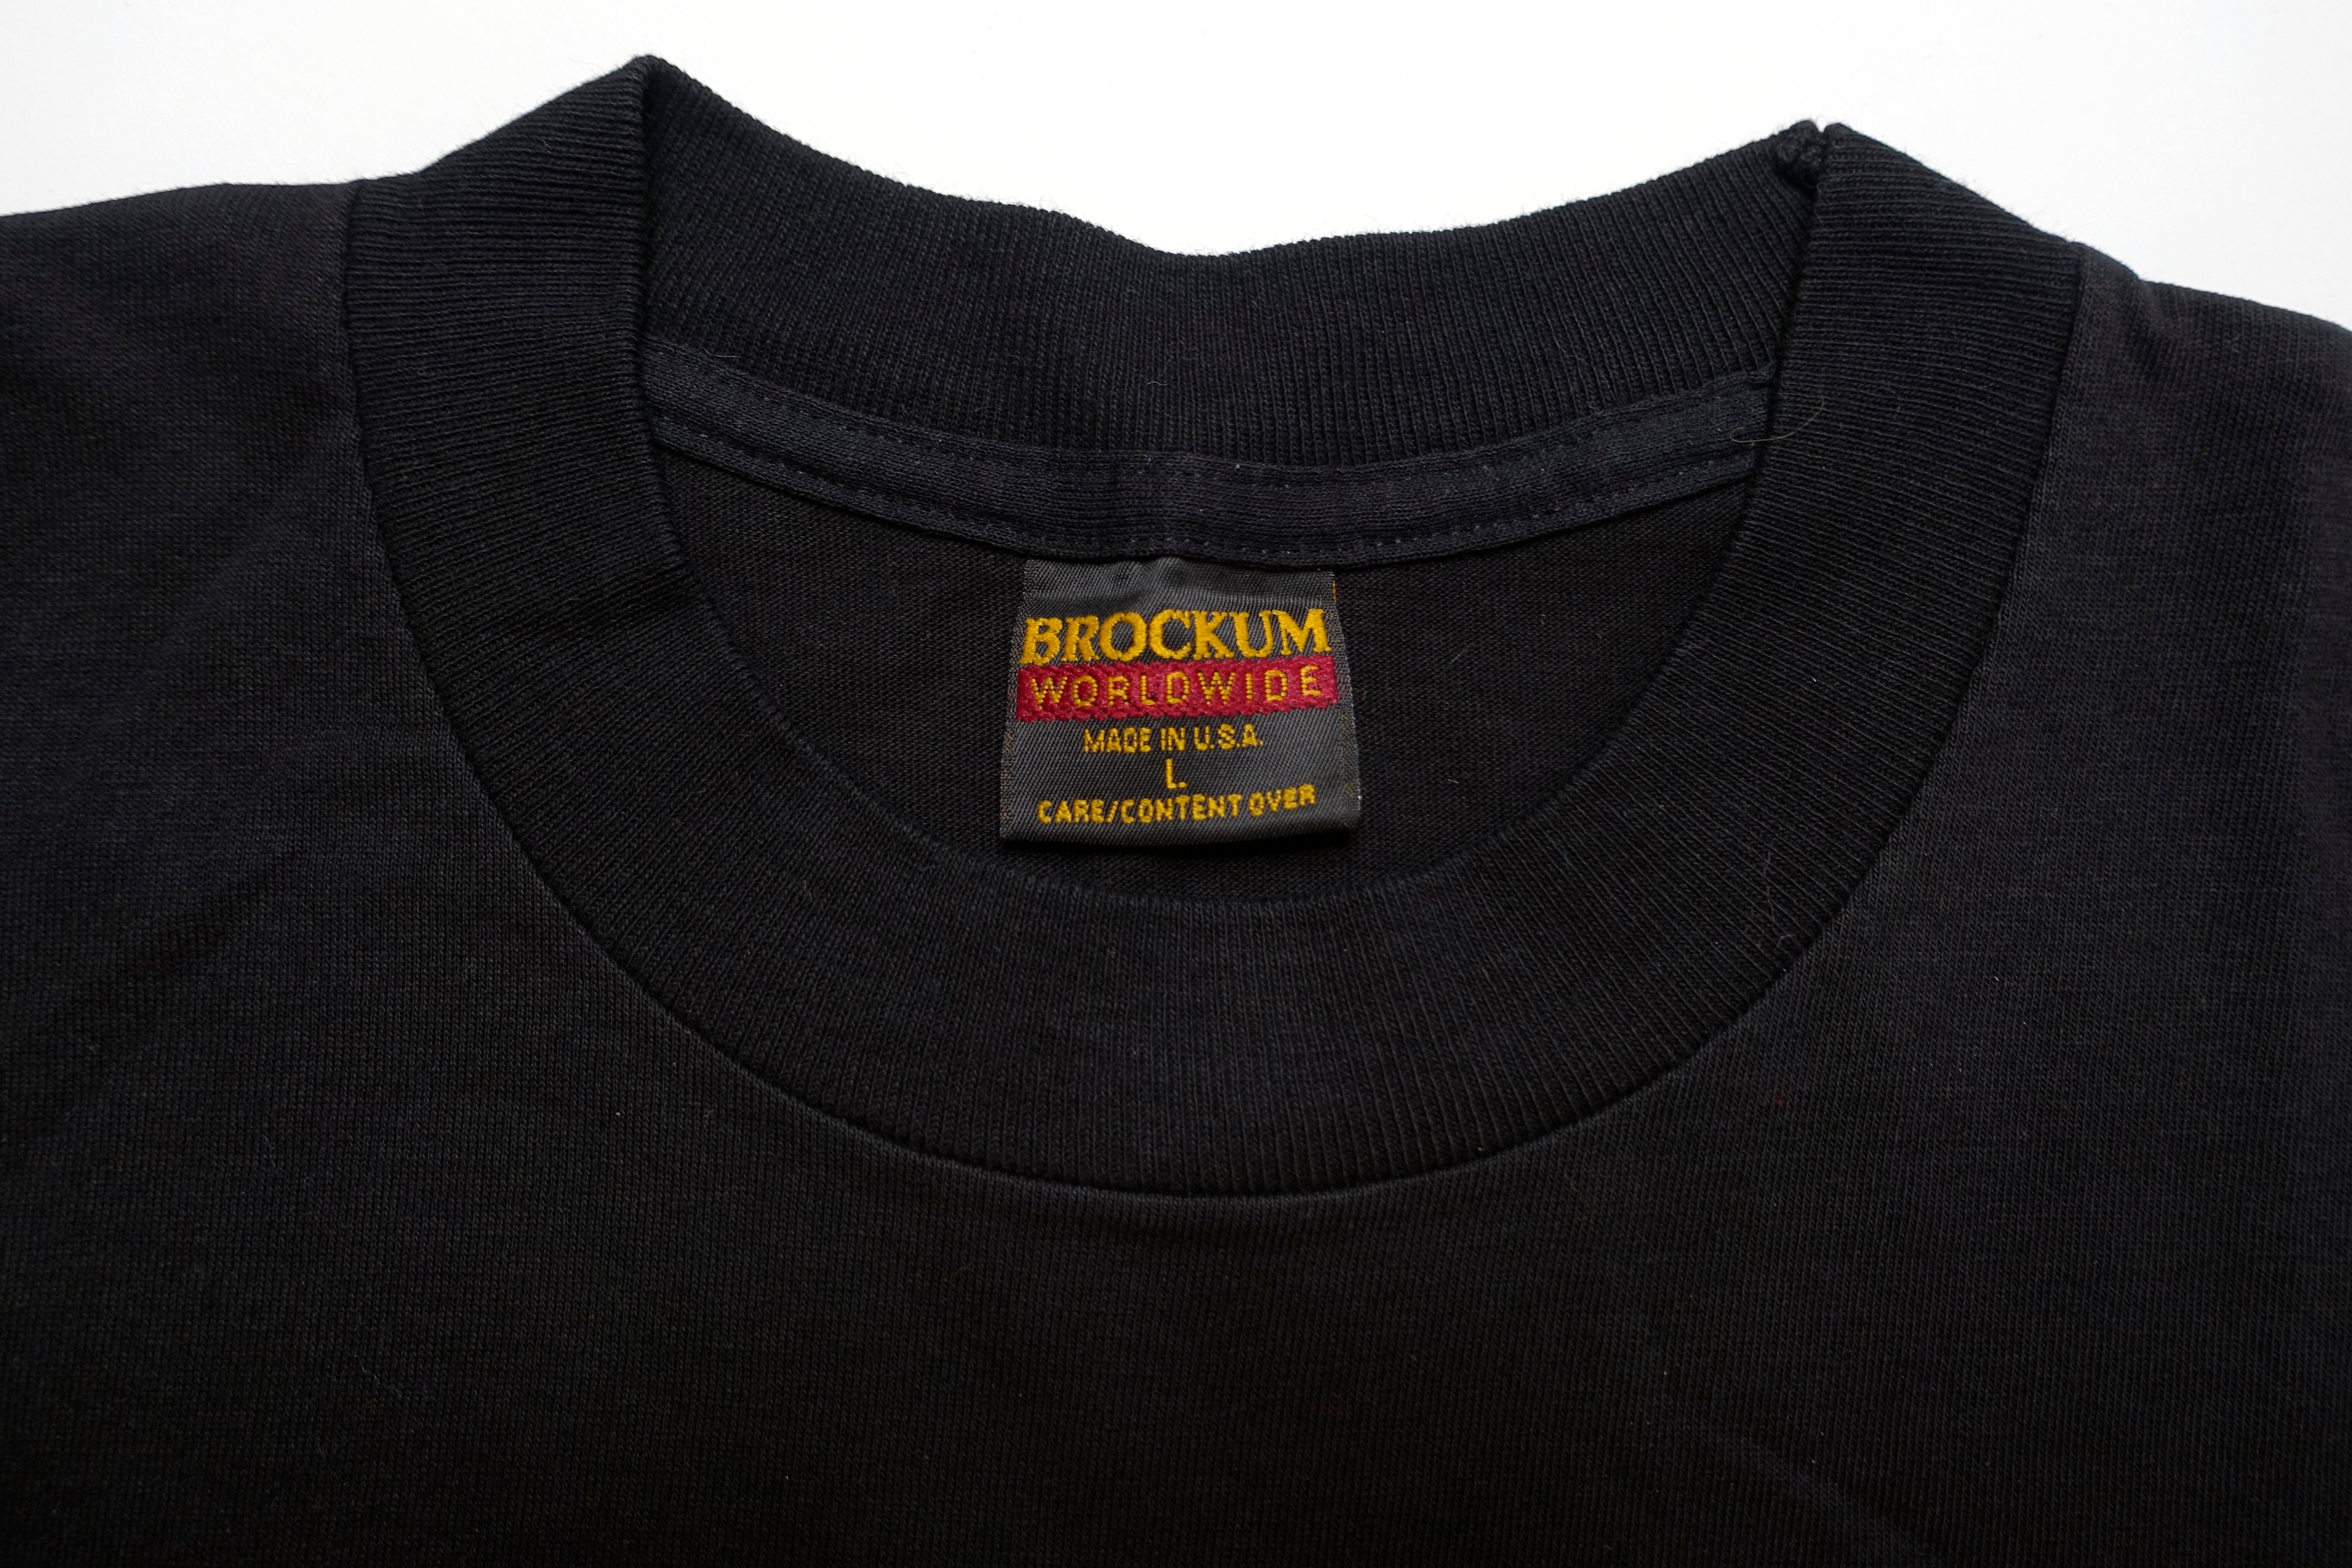 Danzig - 4P 1994 North American Tour Shirt Size Large / Medium (Blacker Version)